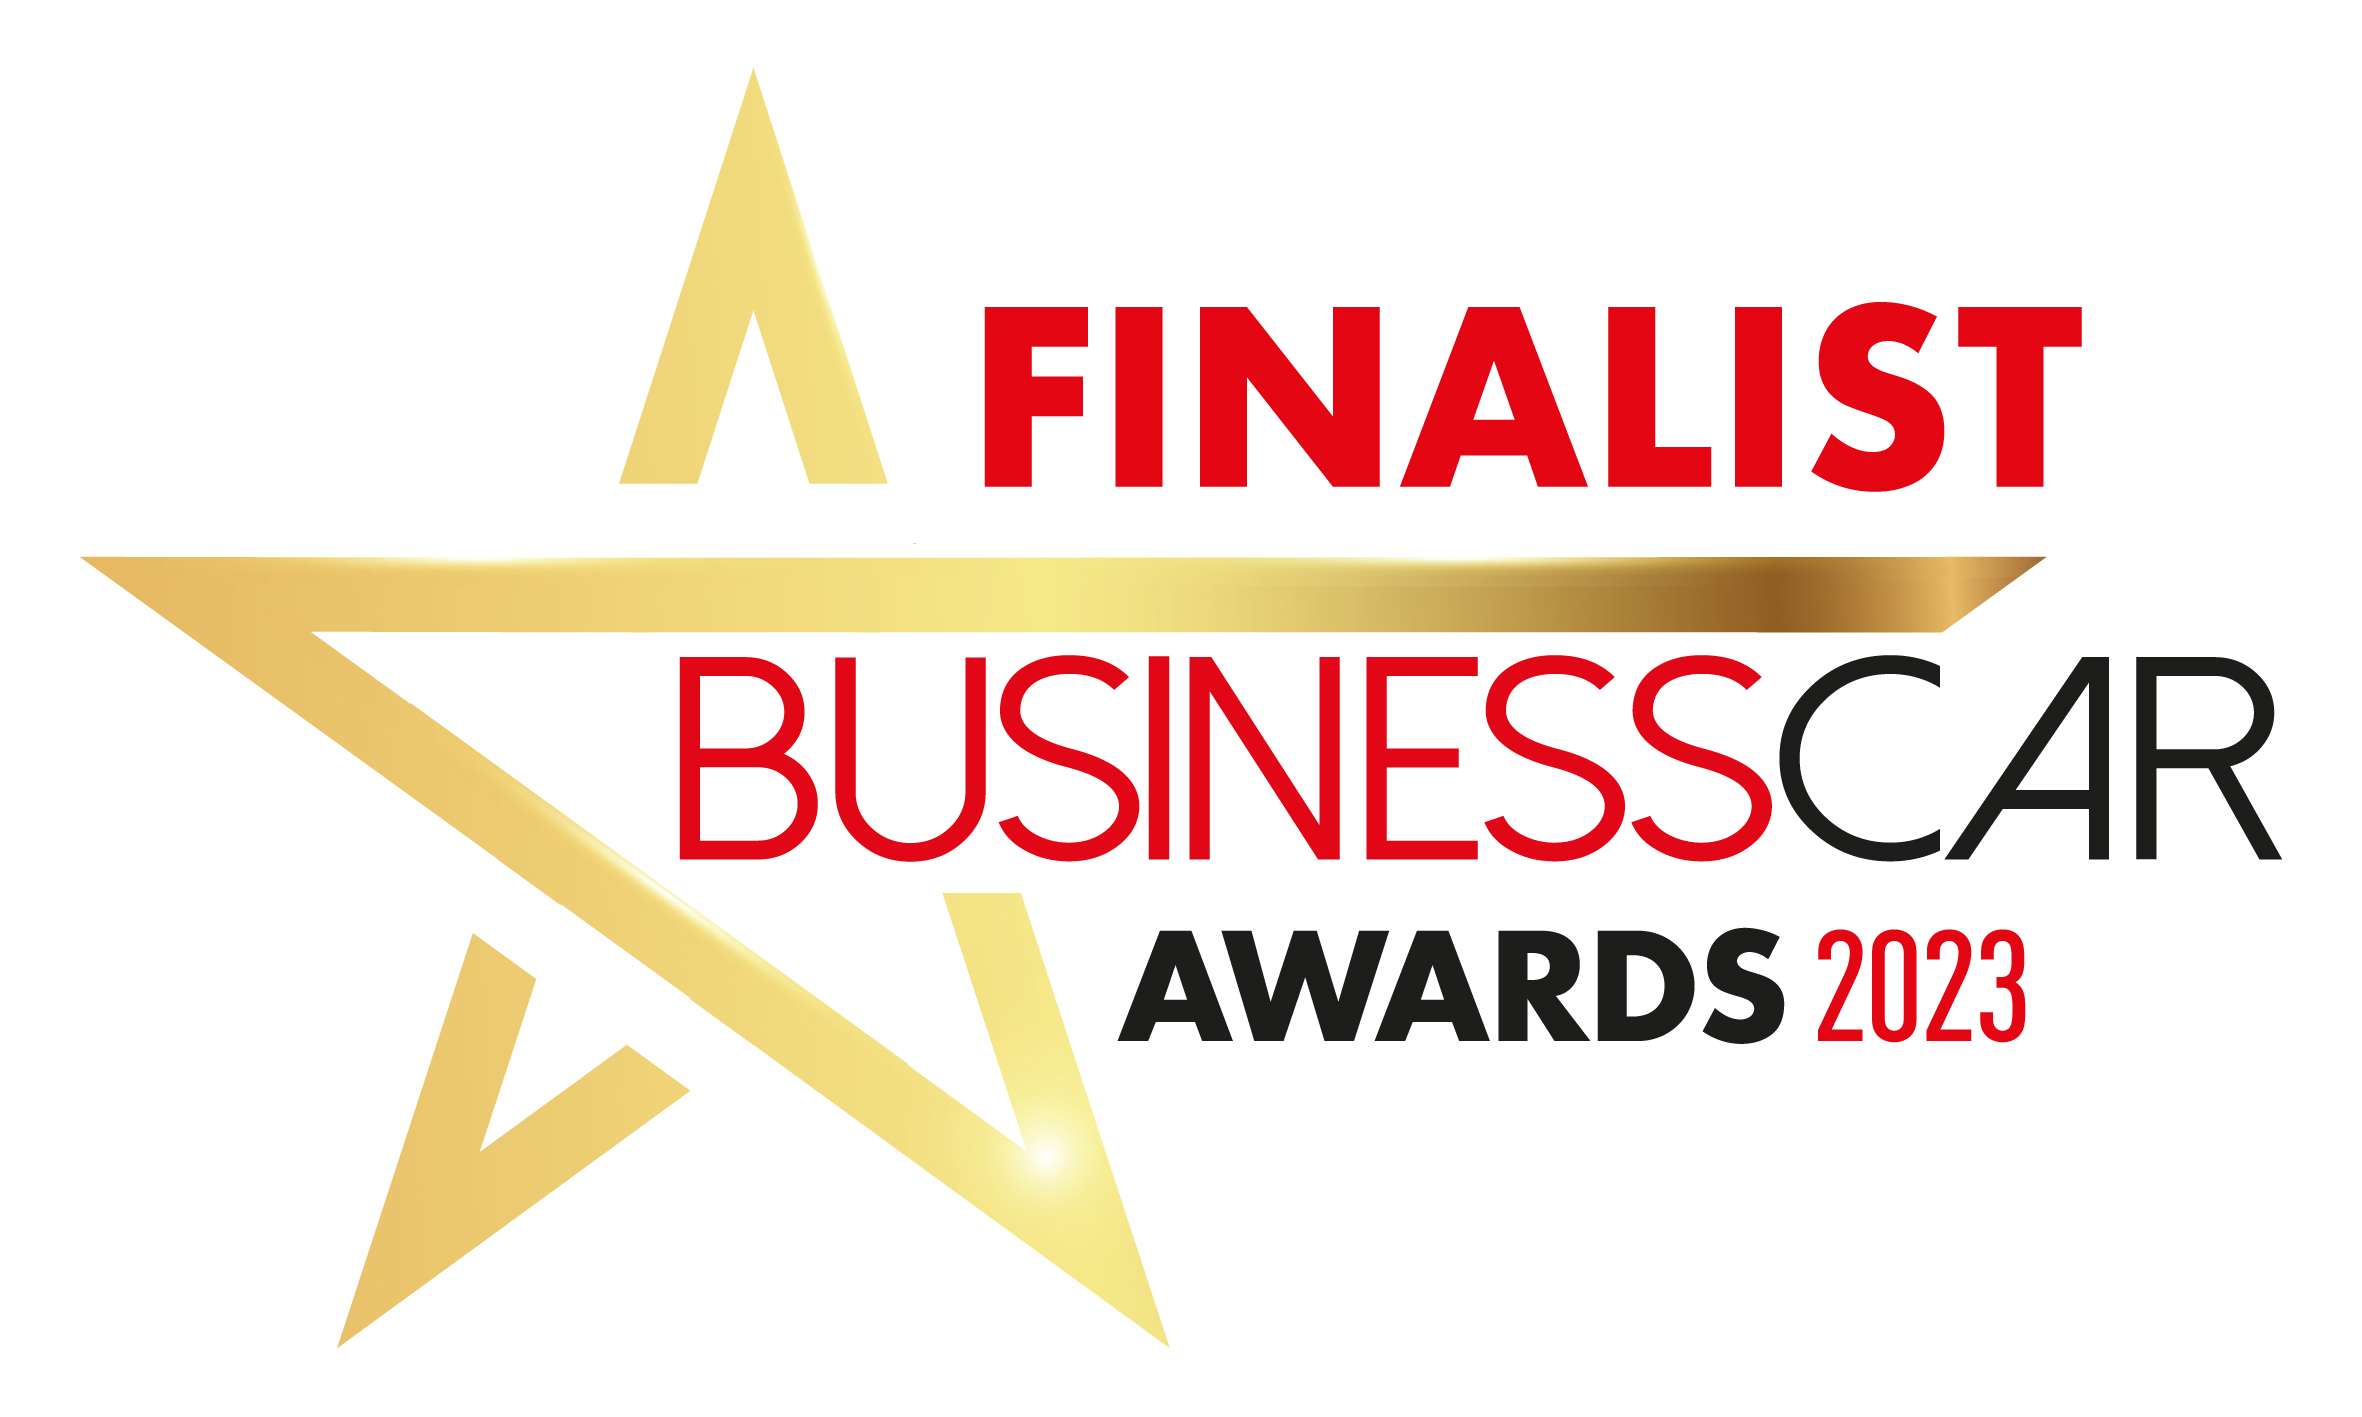 Business Car Awards 2023 - Finalist